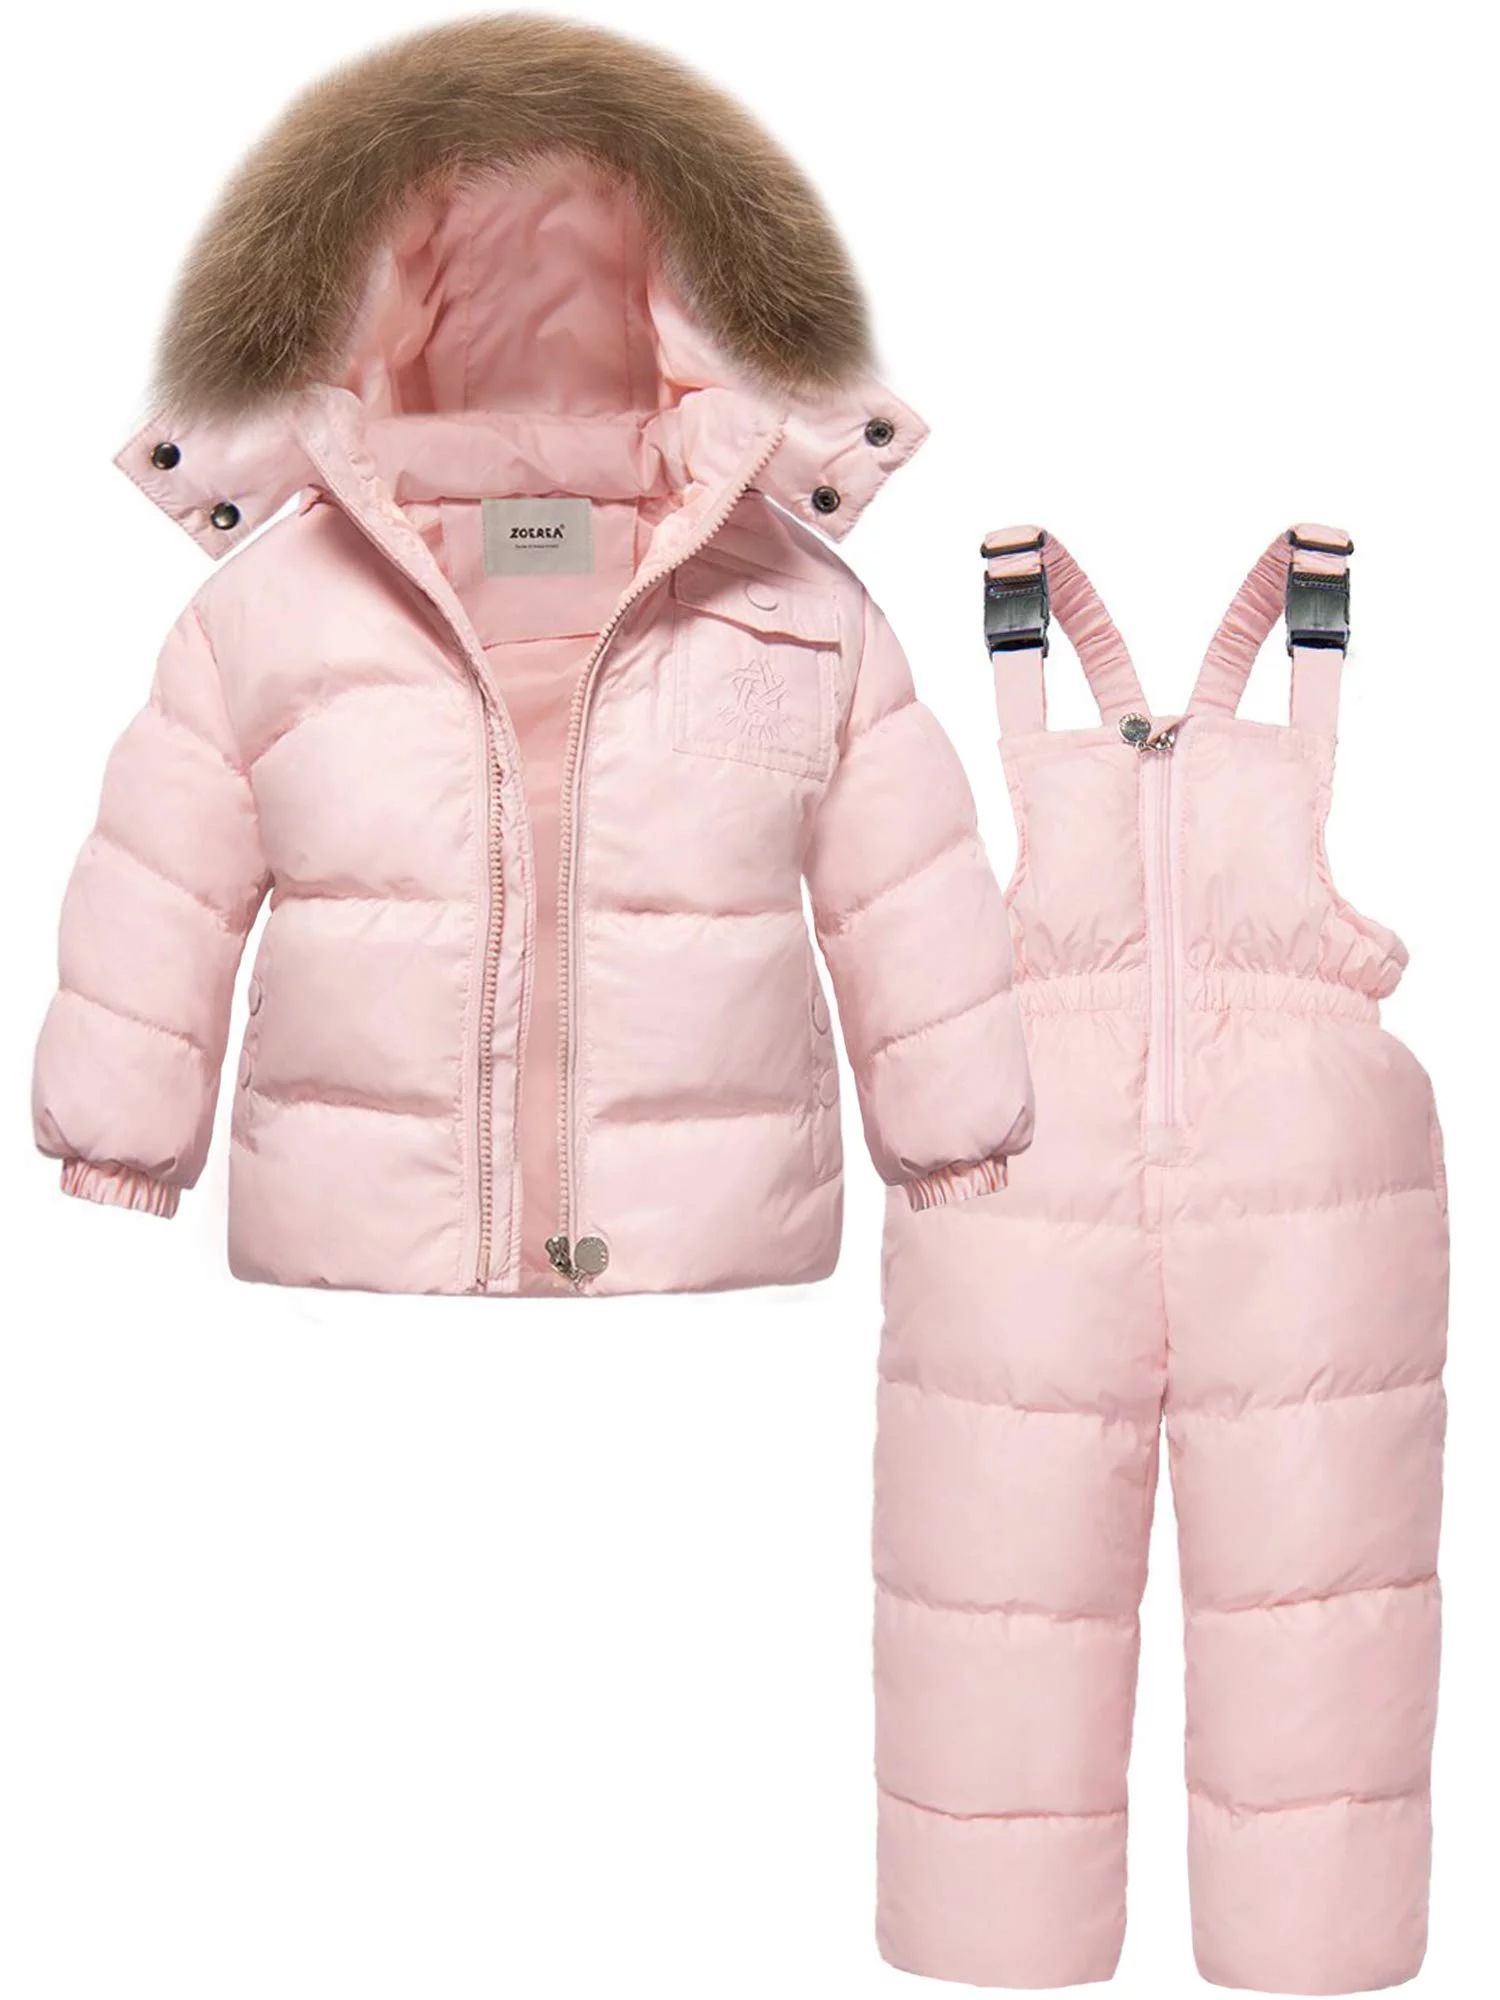 Girls Winter Snowsuit, Children Clothing Sets Winter Hooded Duck Down Jacket + Trousers Snowsuit ... | Walmart (US)